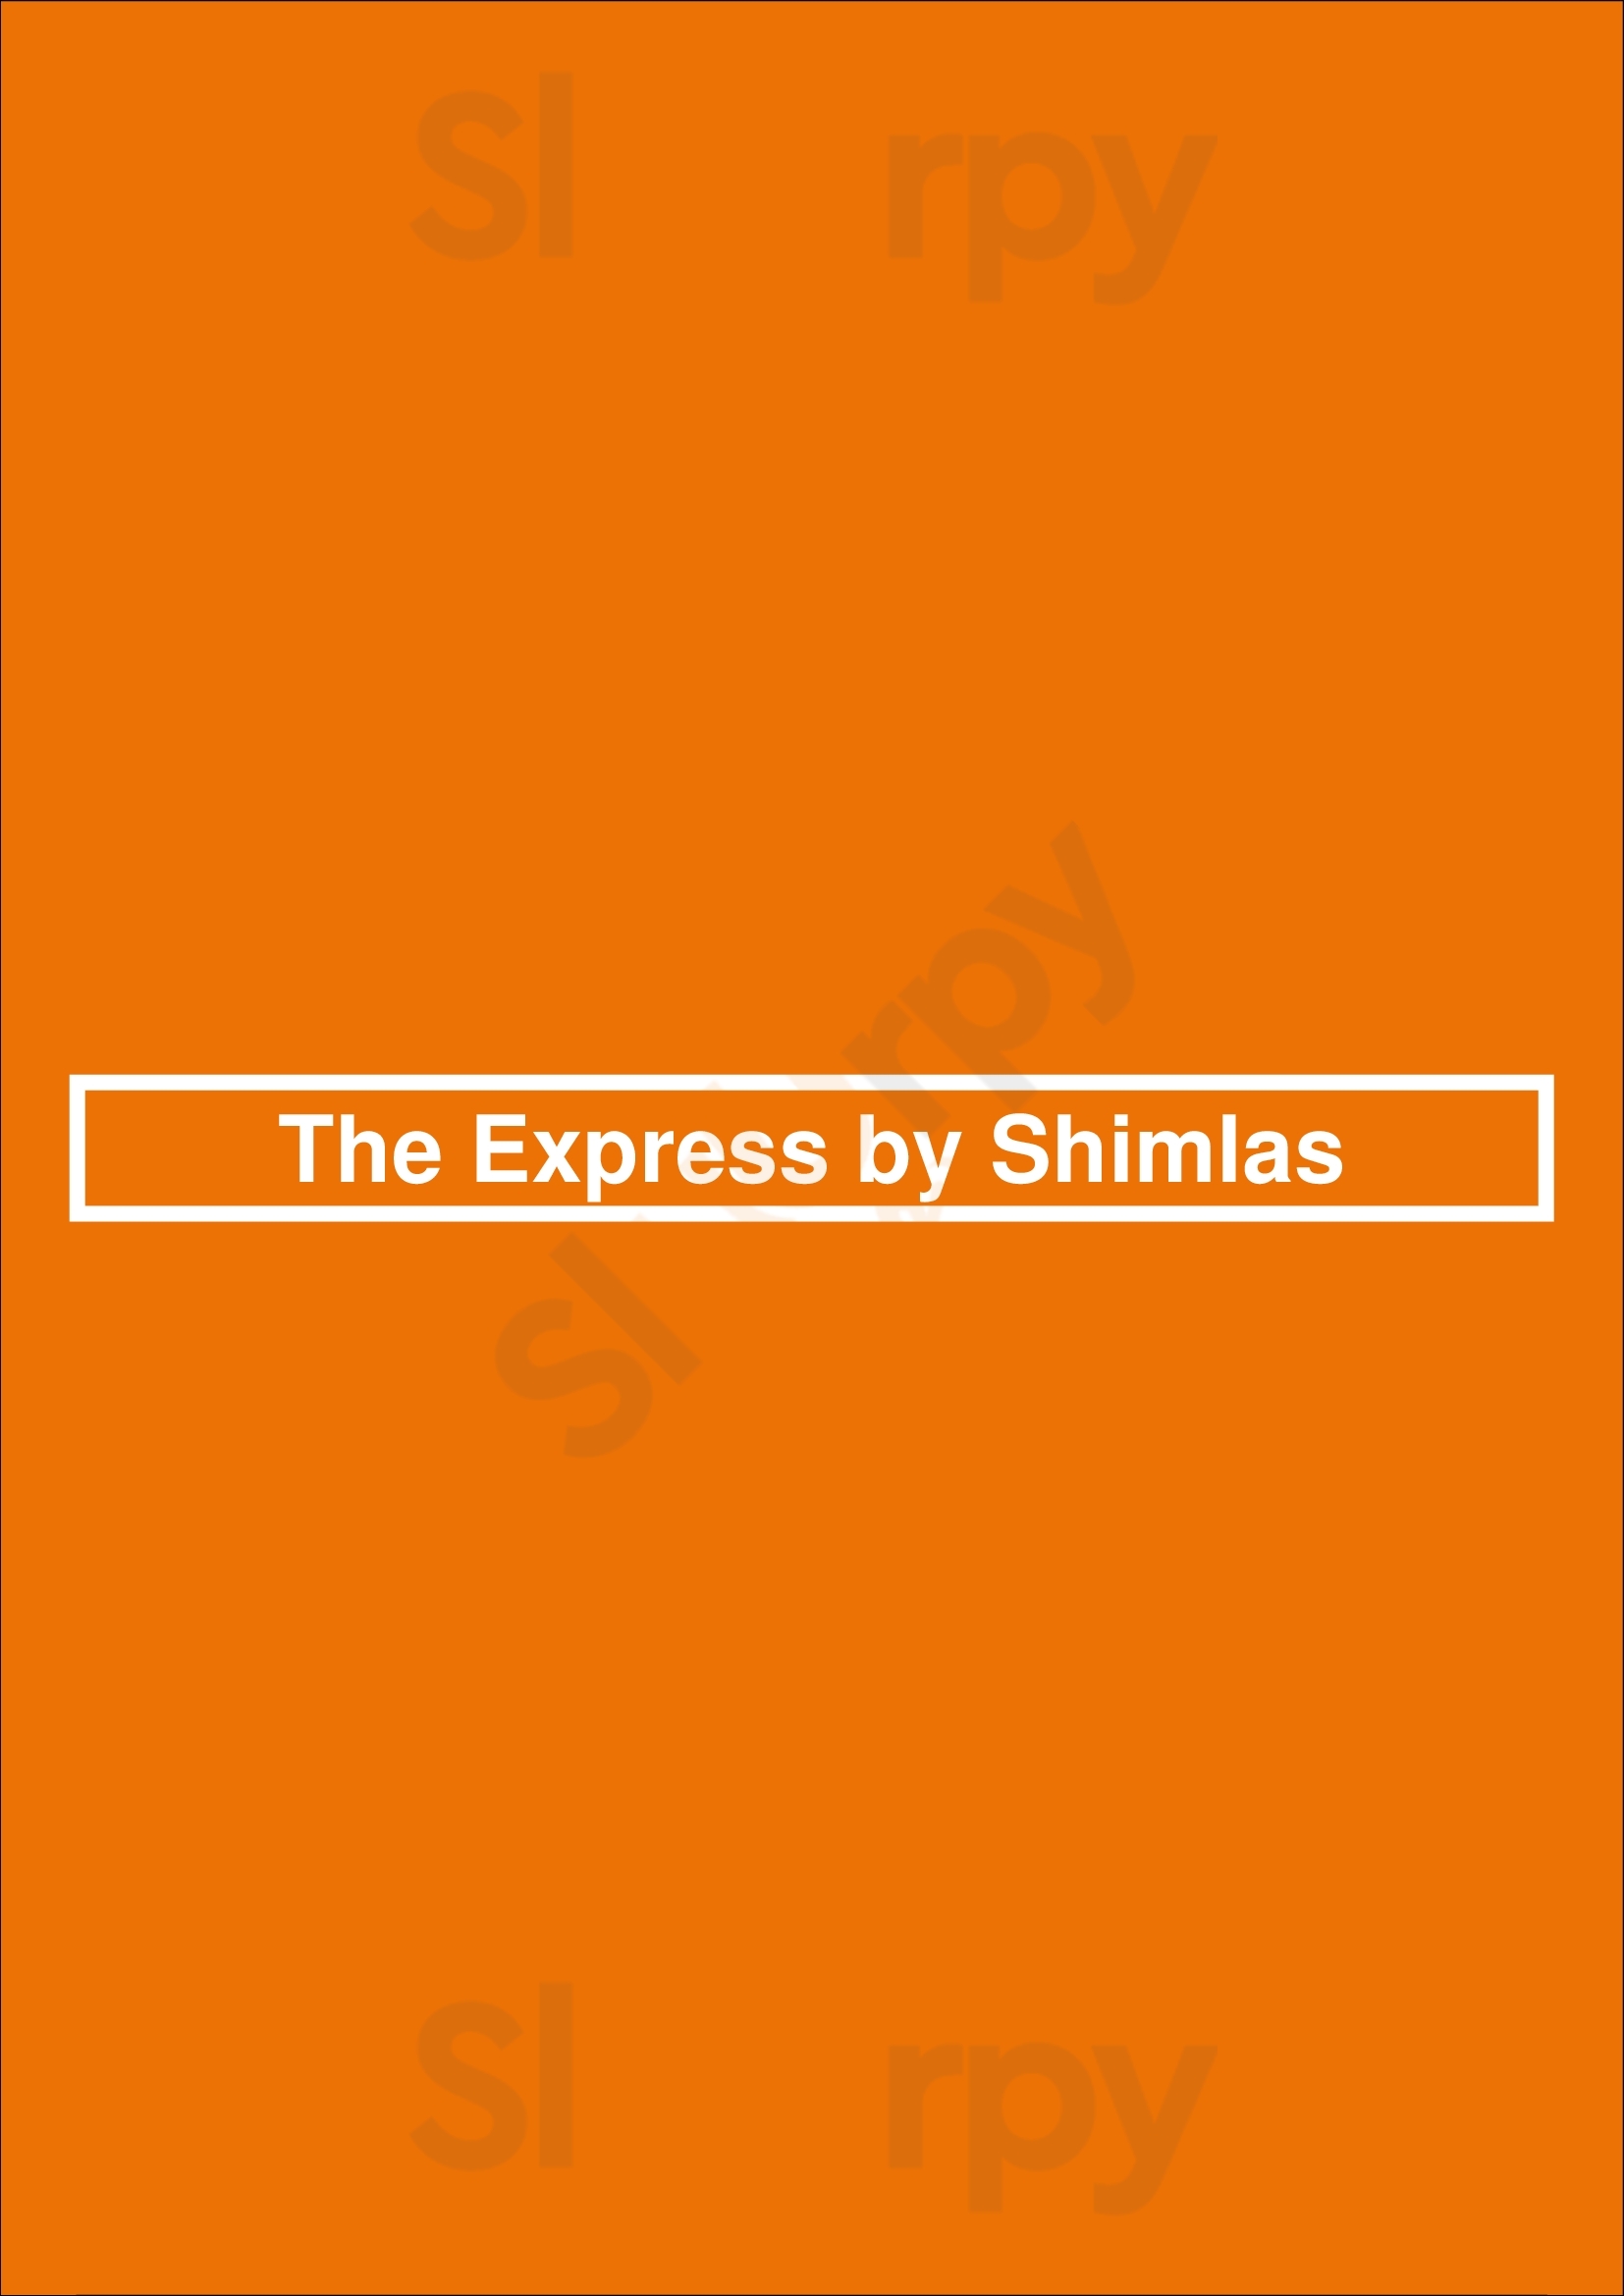 The Express By Shimlas Sheffield Menu - 1